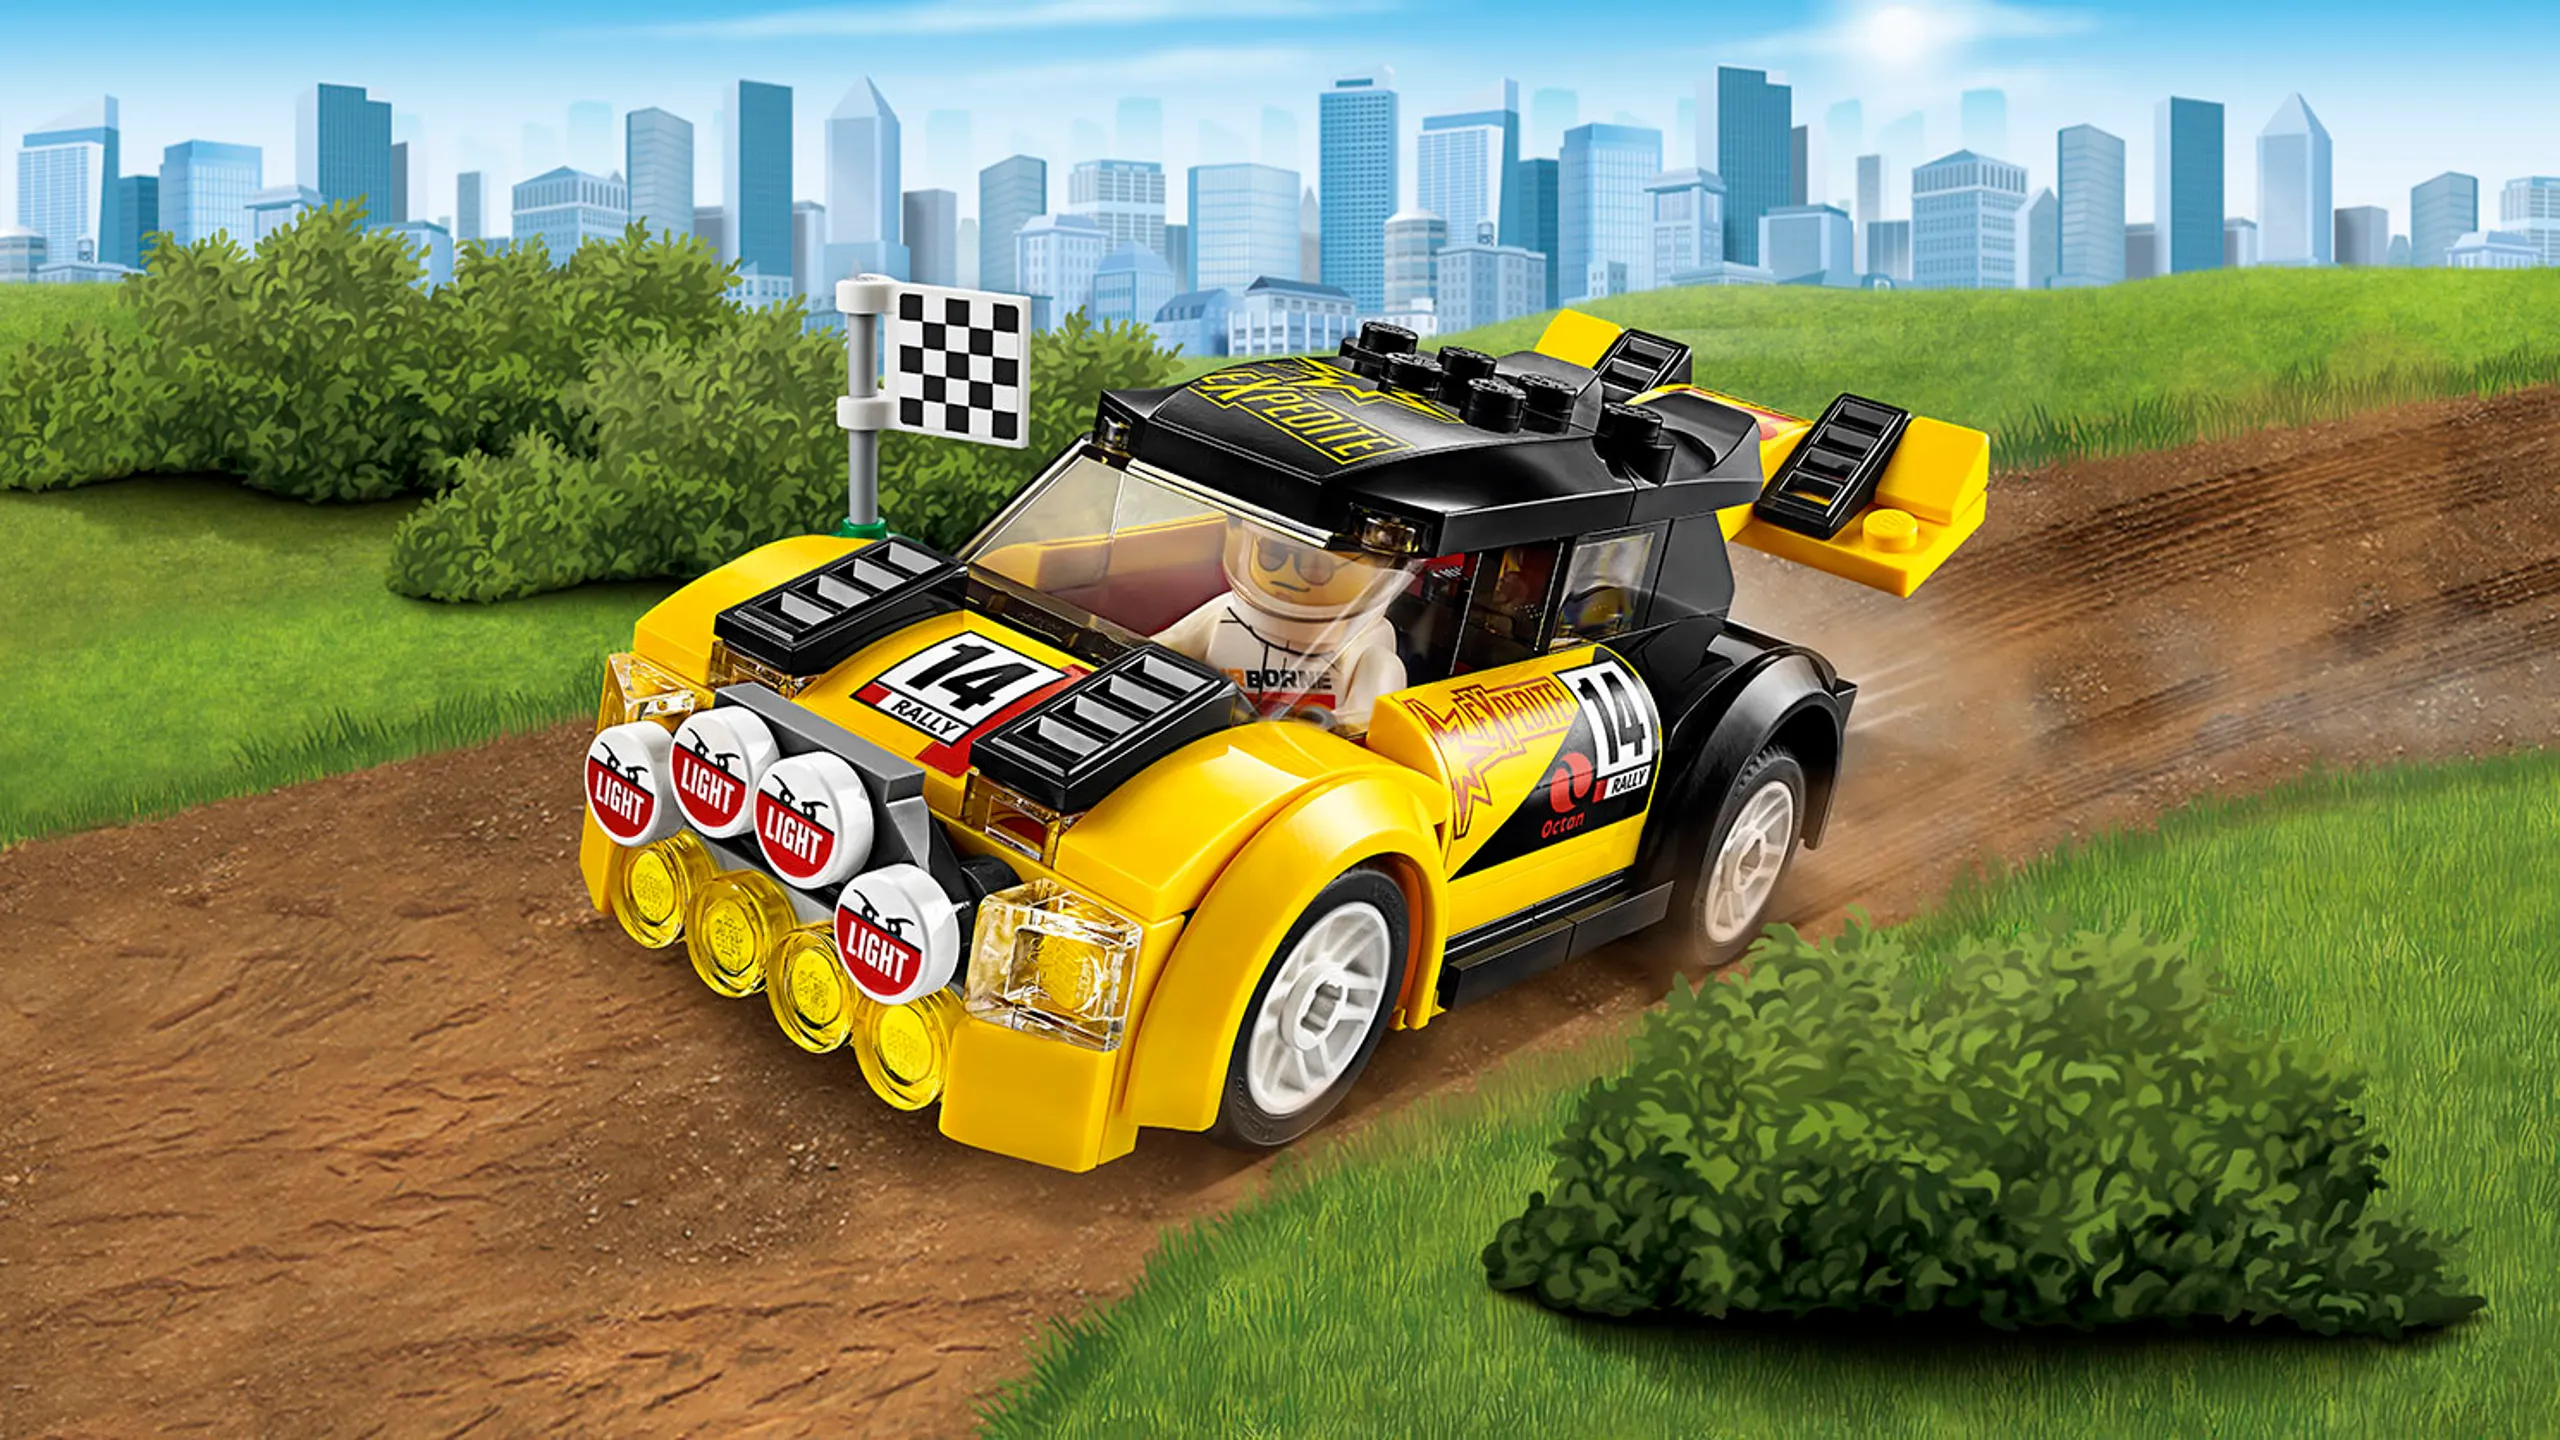 LEGO City Kule kjøretøy – Rallybil 60113